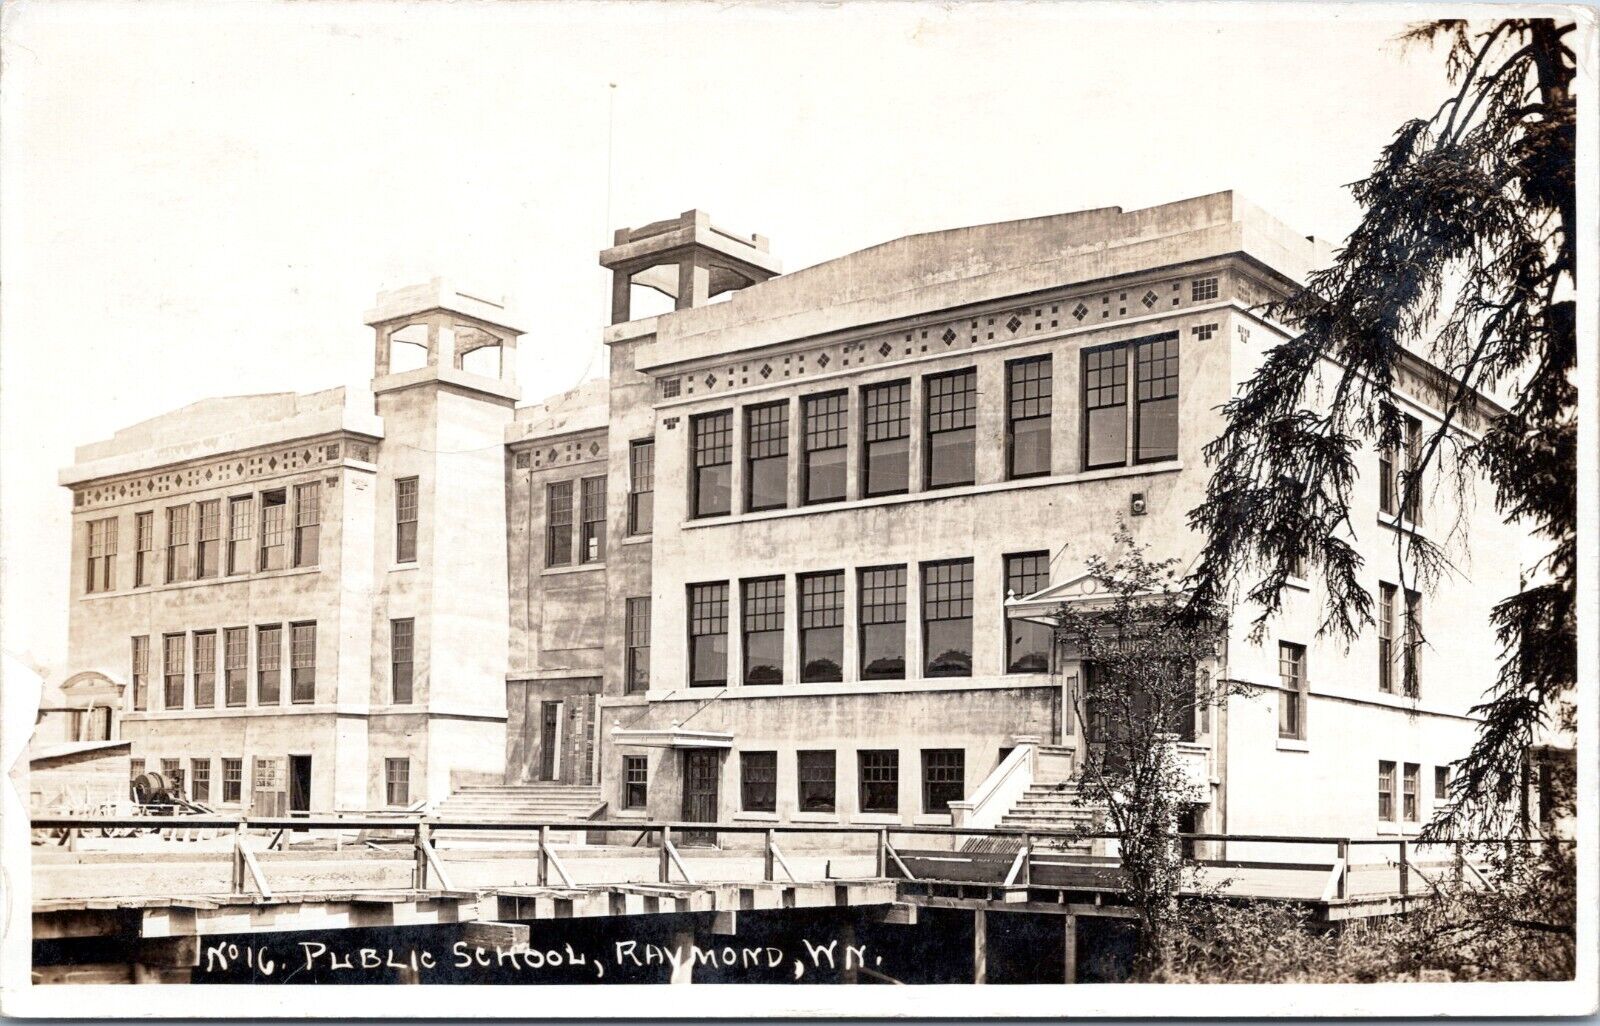 RPPC - No. 16 Public School, Raymond Washington - Real Photo Postcard - 1917